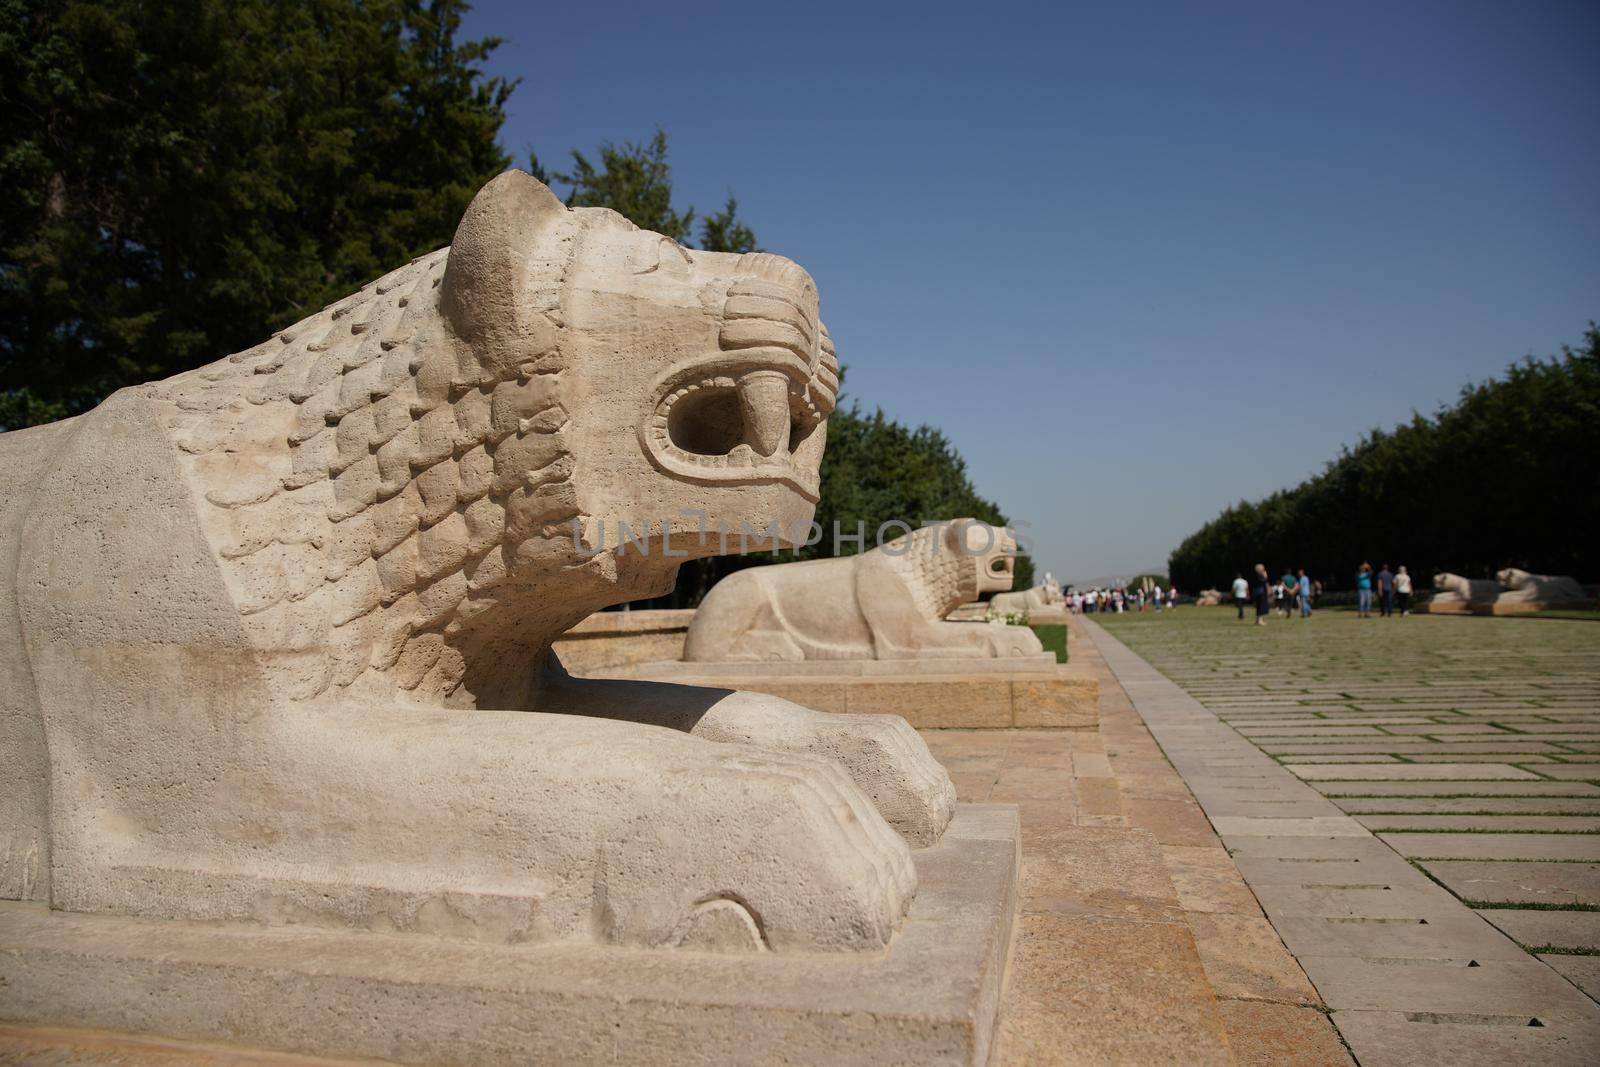 Lion sculpture located at the Road of Lions in Anitkabir, Ankara, Turkiye by EvrenKalinbacak